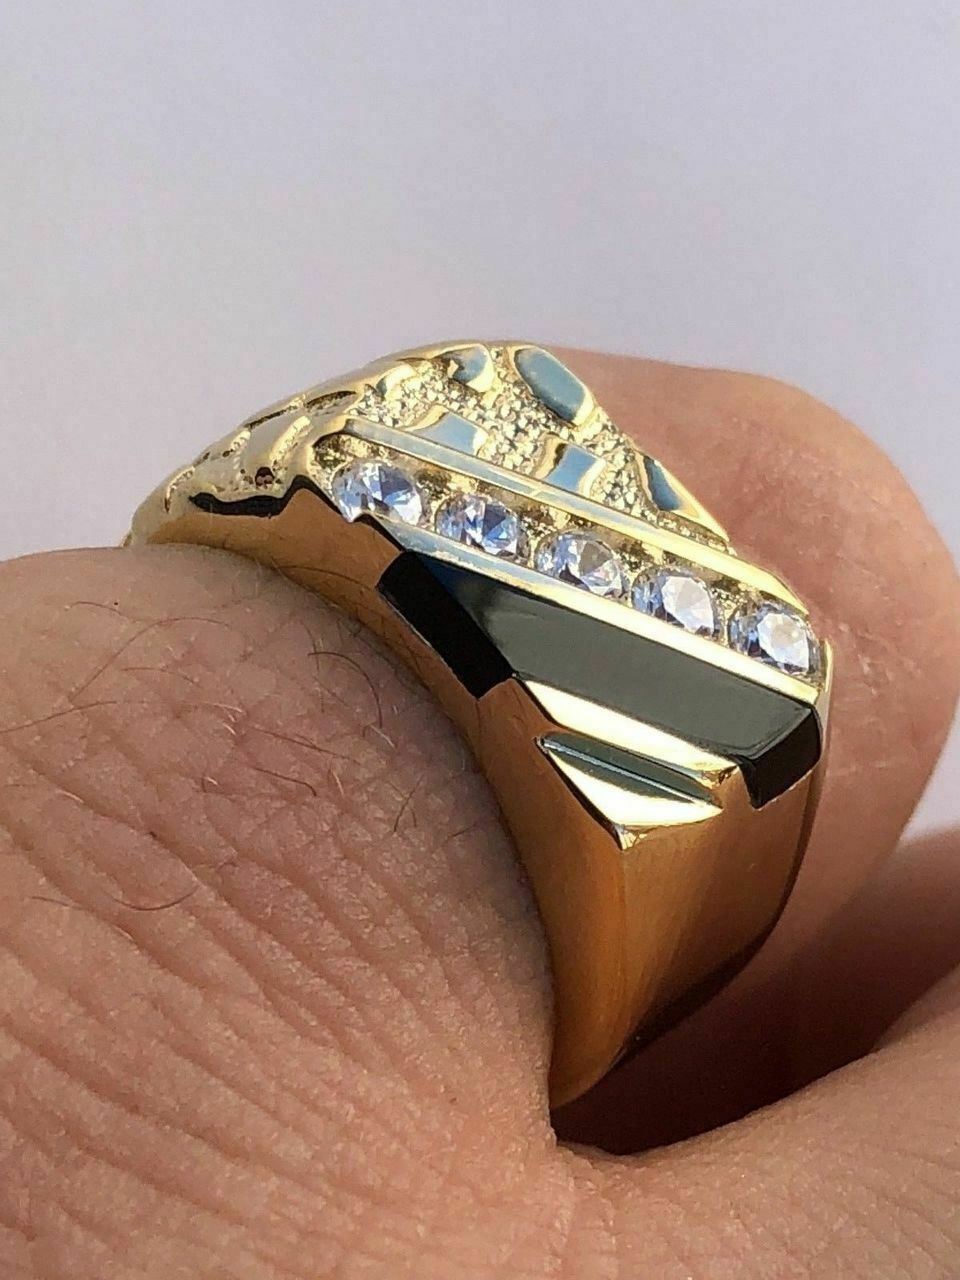 Men's Rings: Gold, Silver, & Black Rings